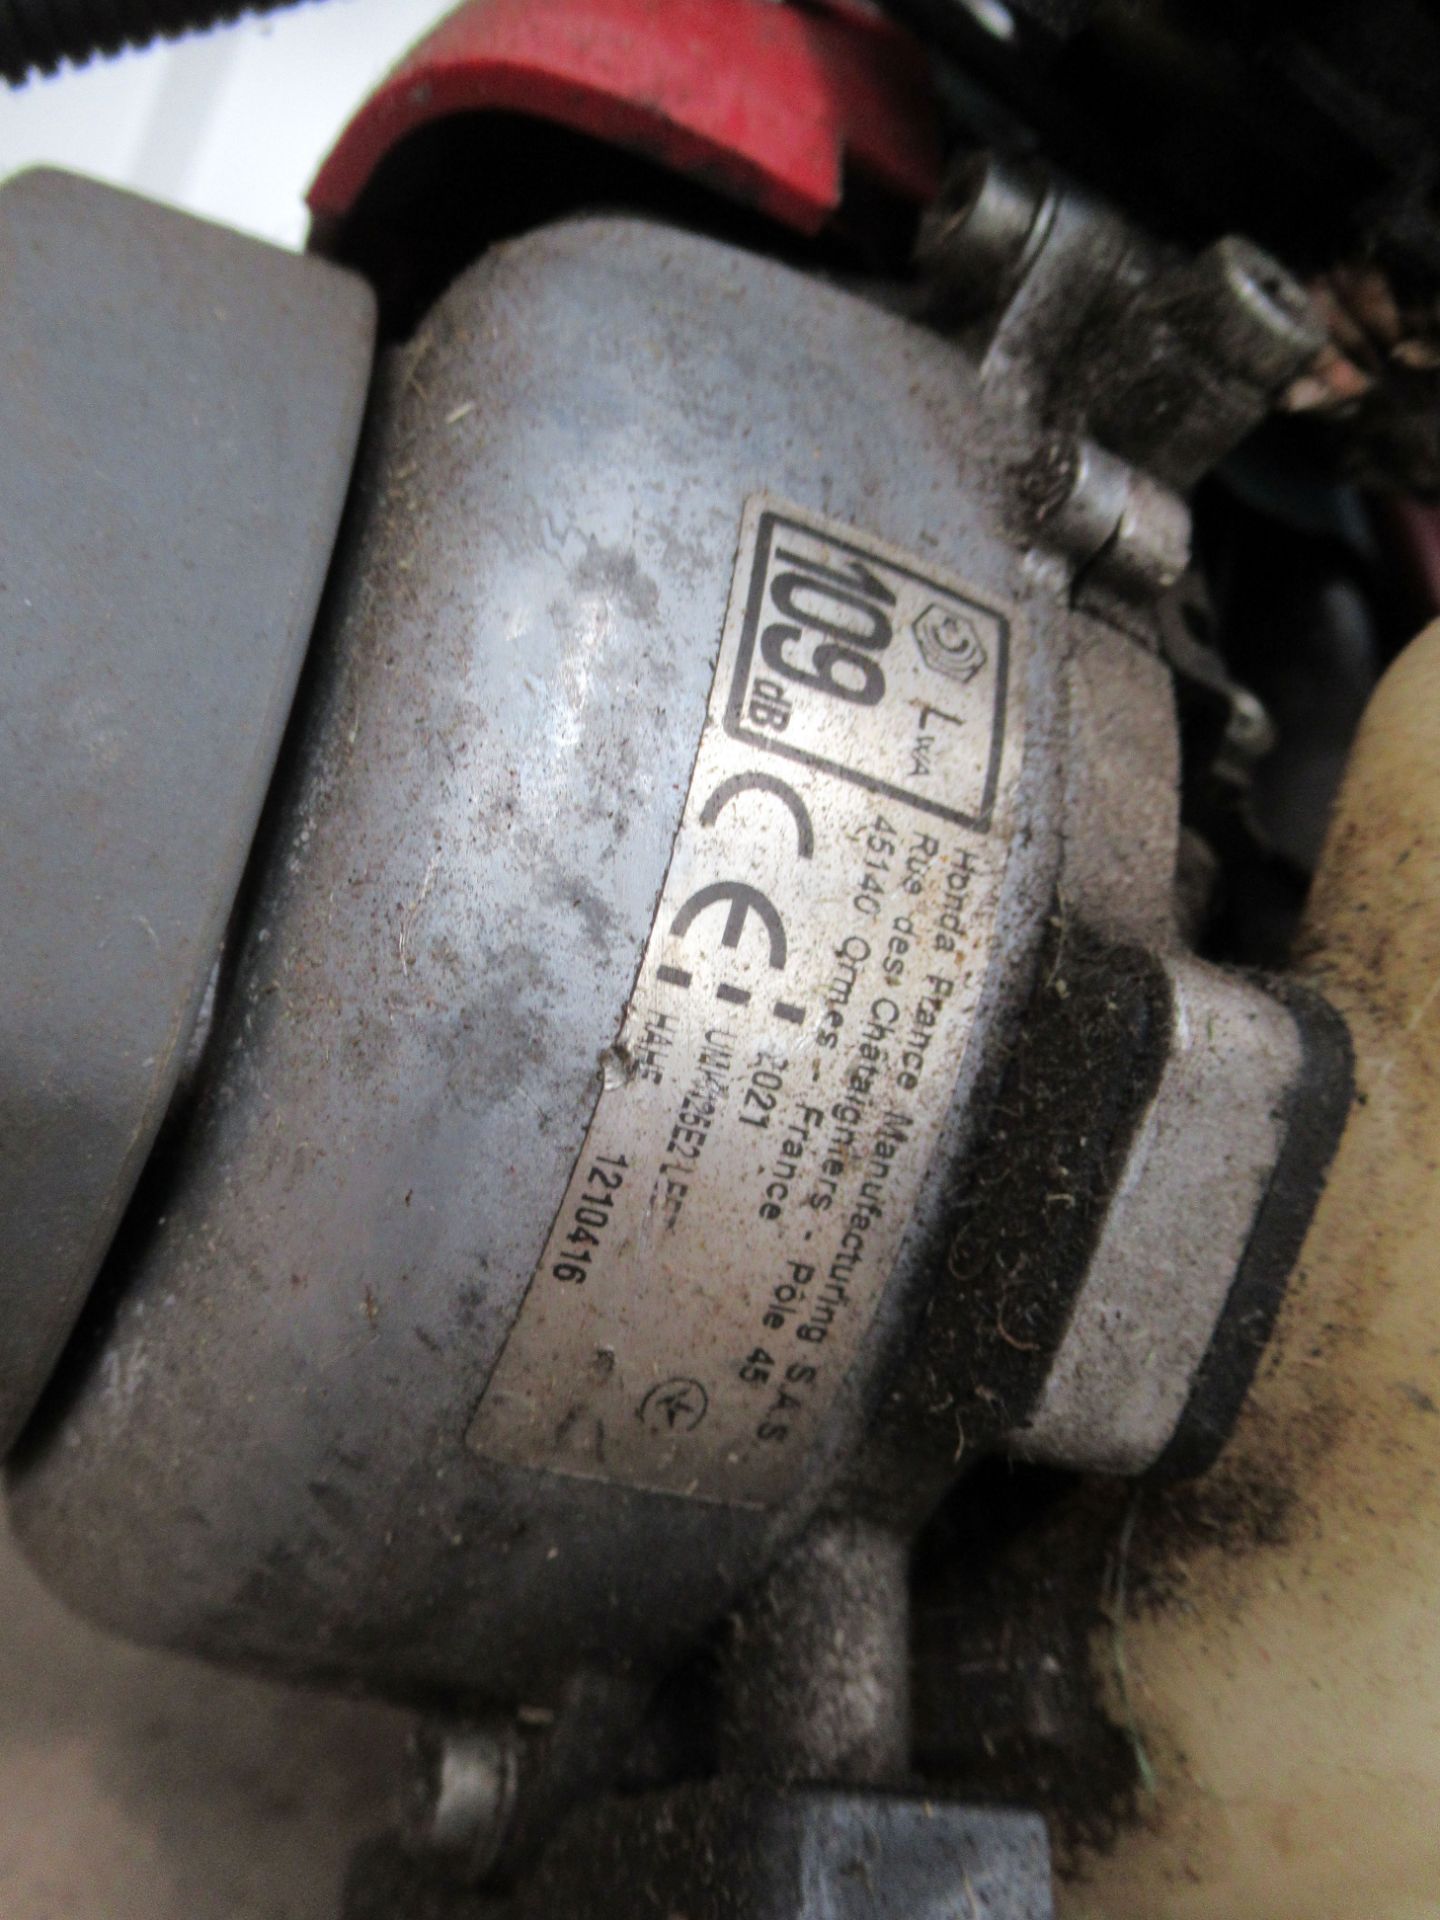 Honda UMK425E Petrol Powered Strimmer - spares or repairs - Image 3 of 4